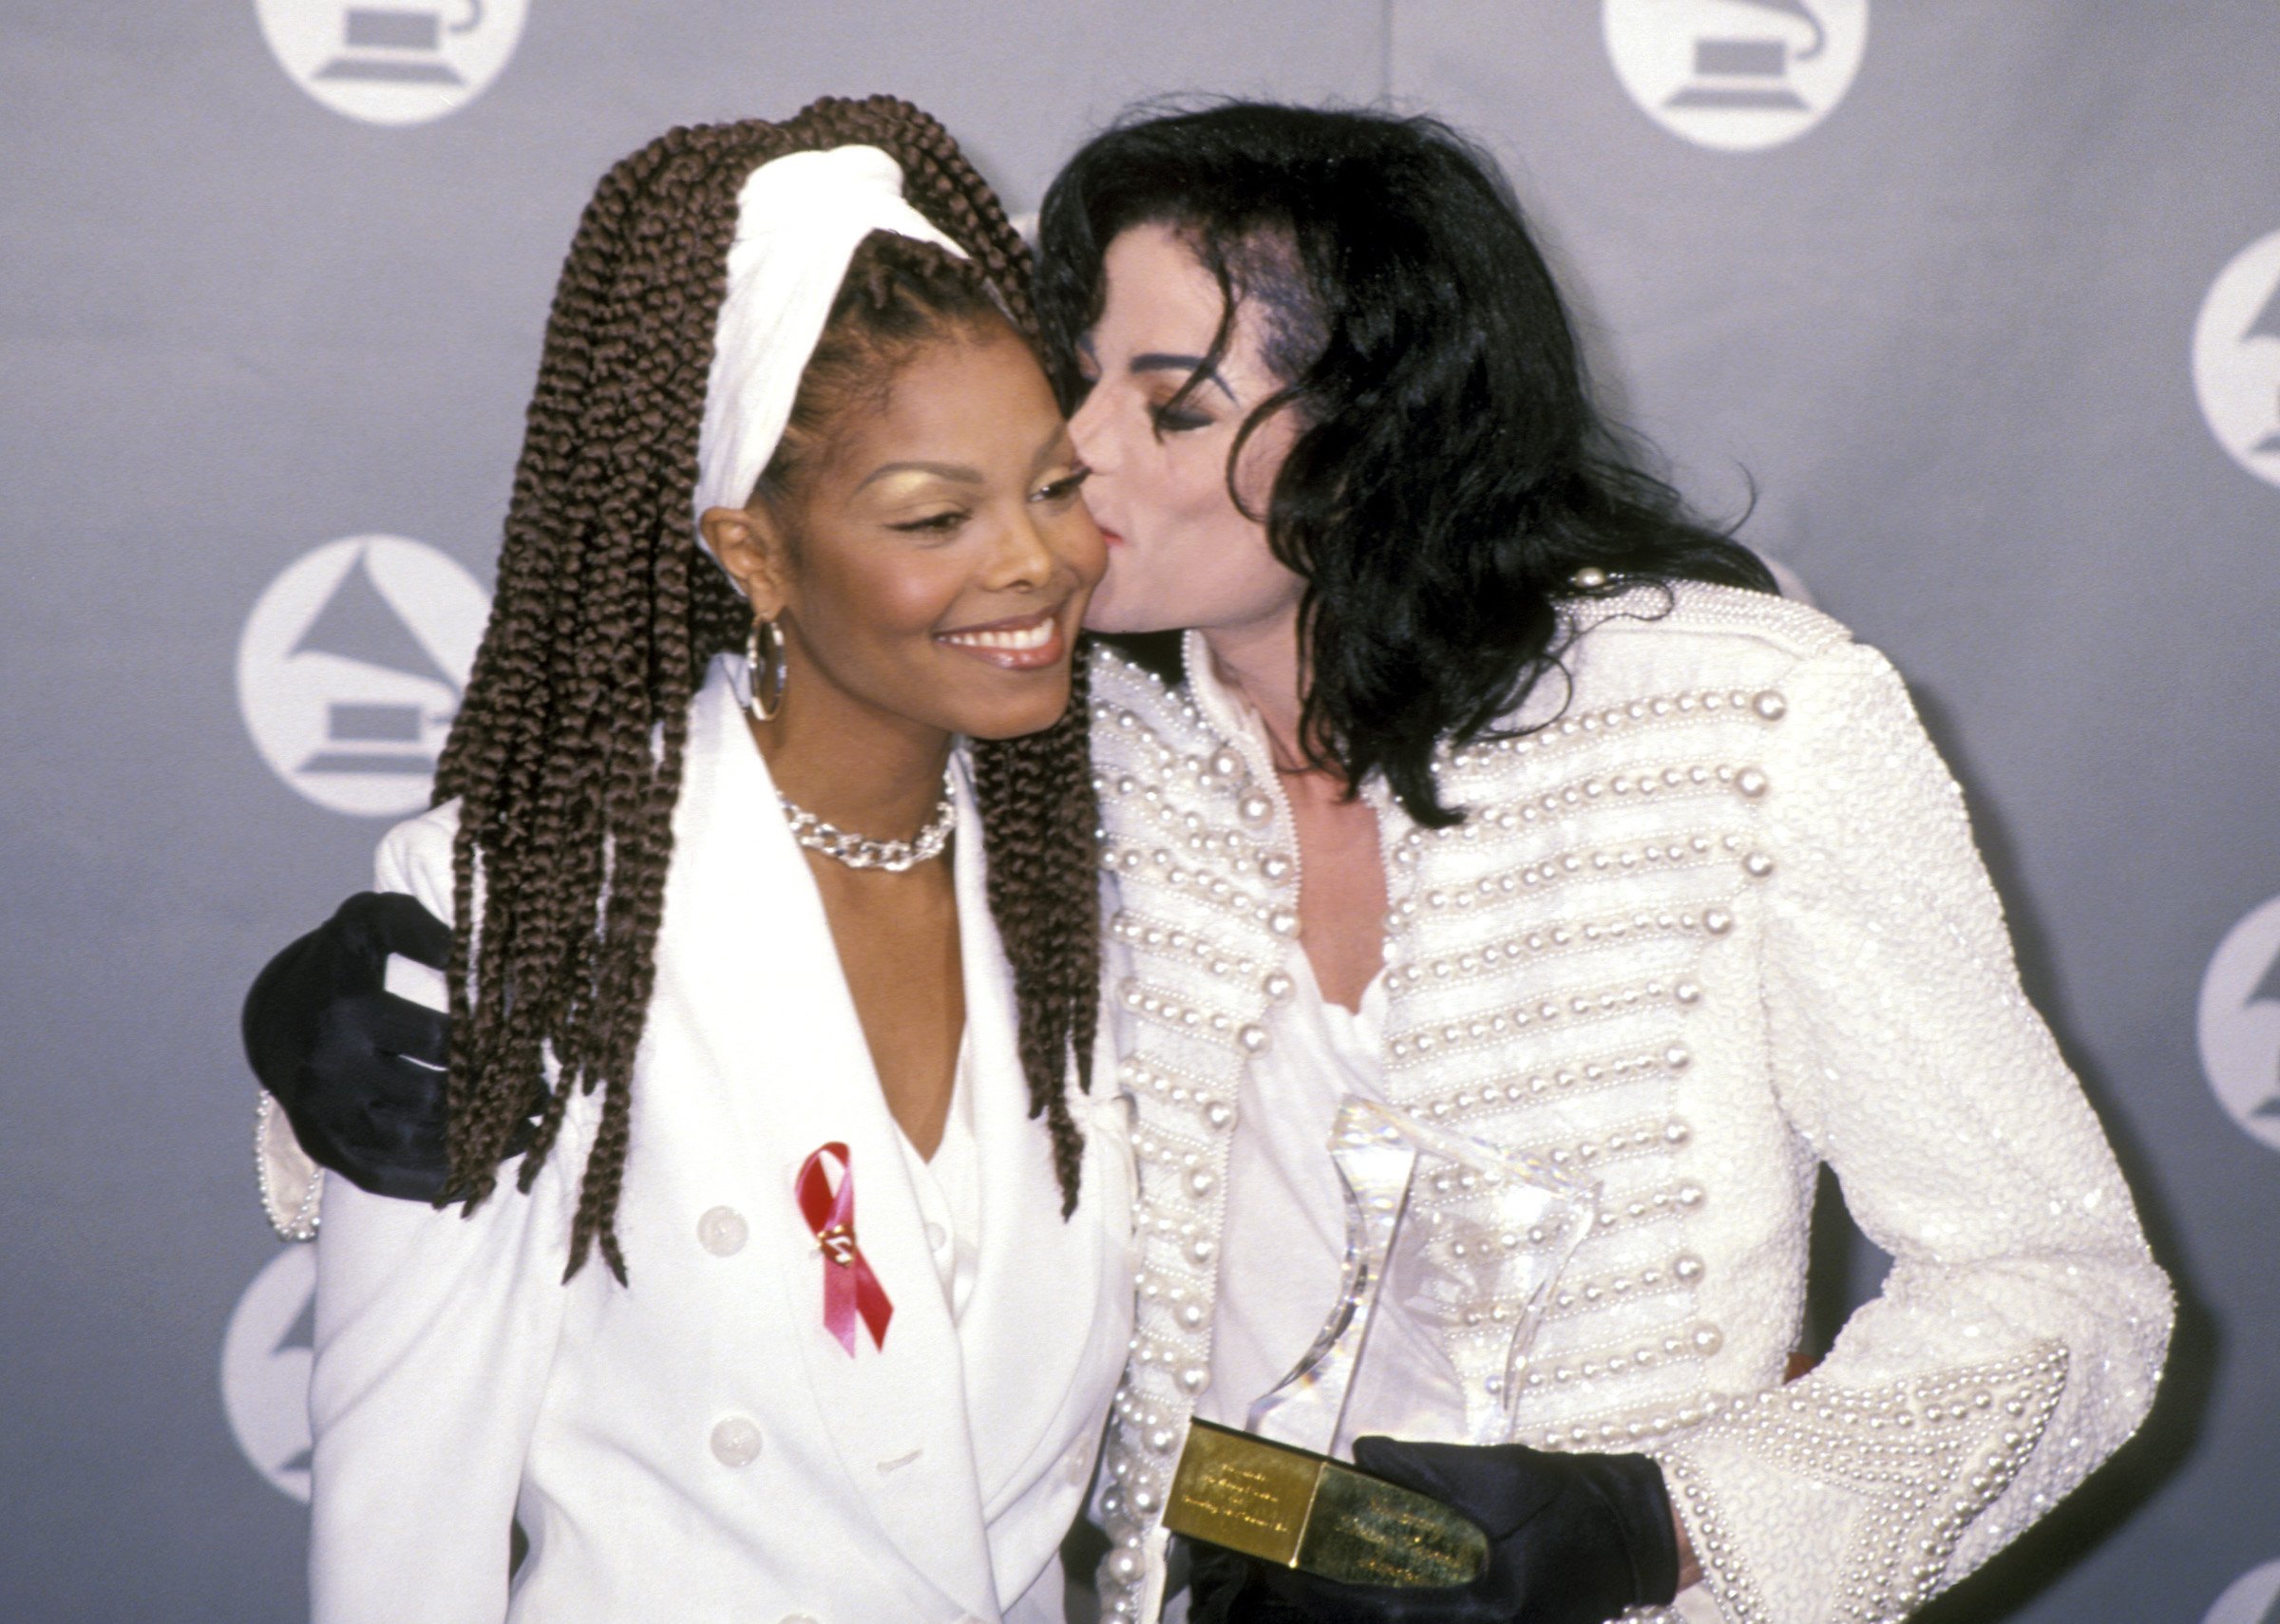 Michael Jackson kissing Janet Jackson on the cheek